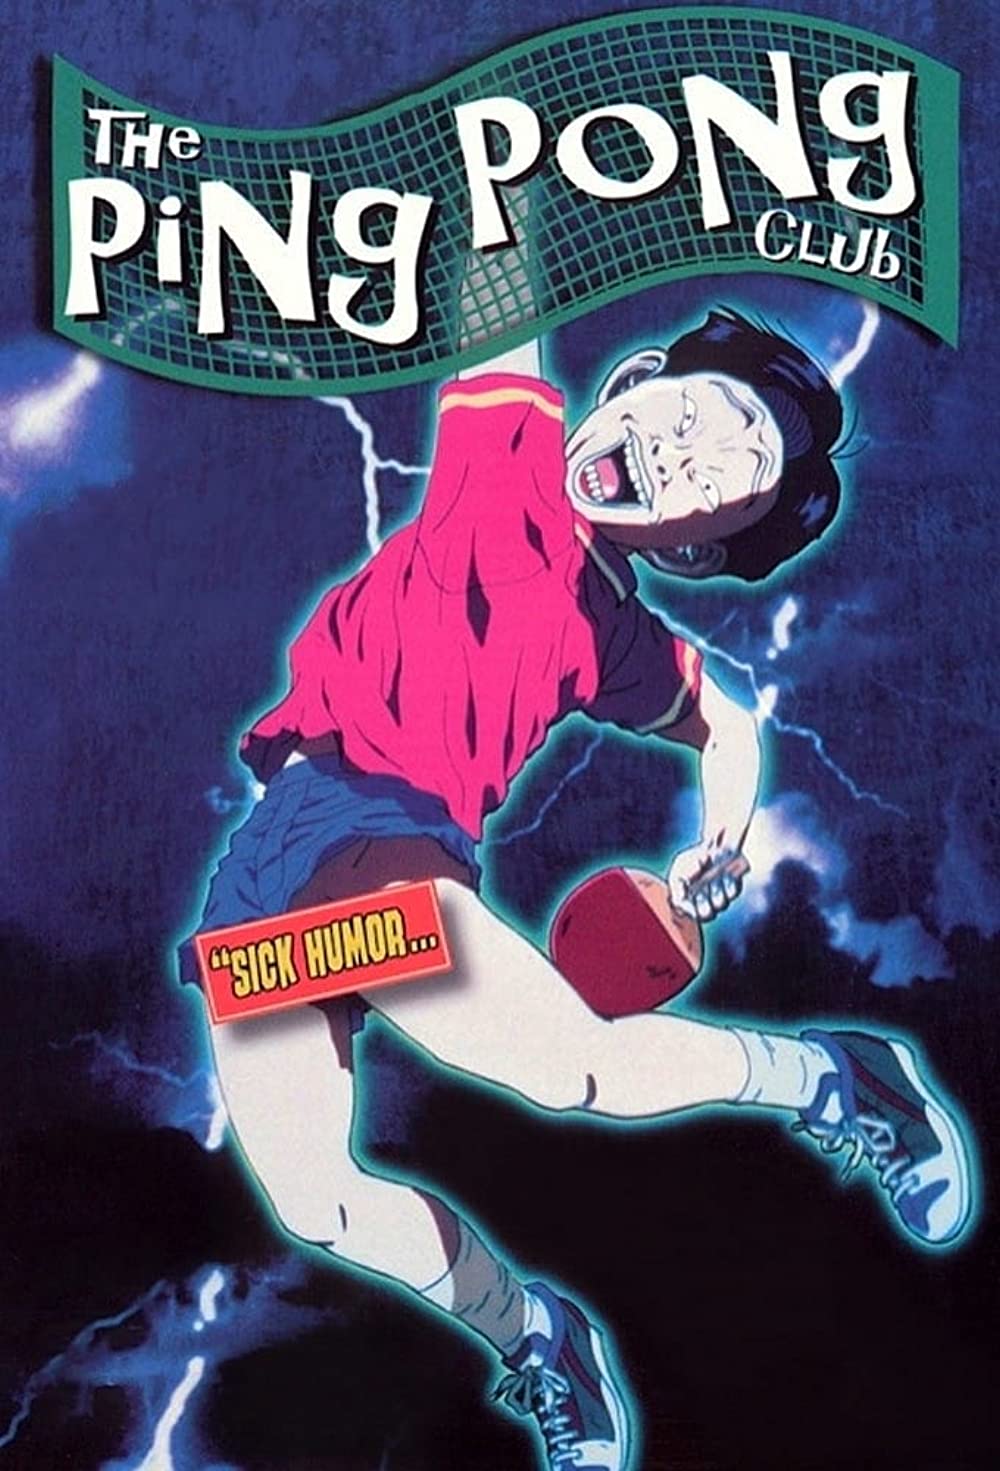 Ping Pong (2002 film) - Wikipedia